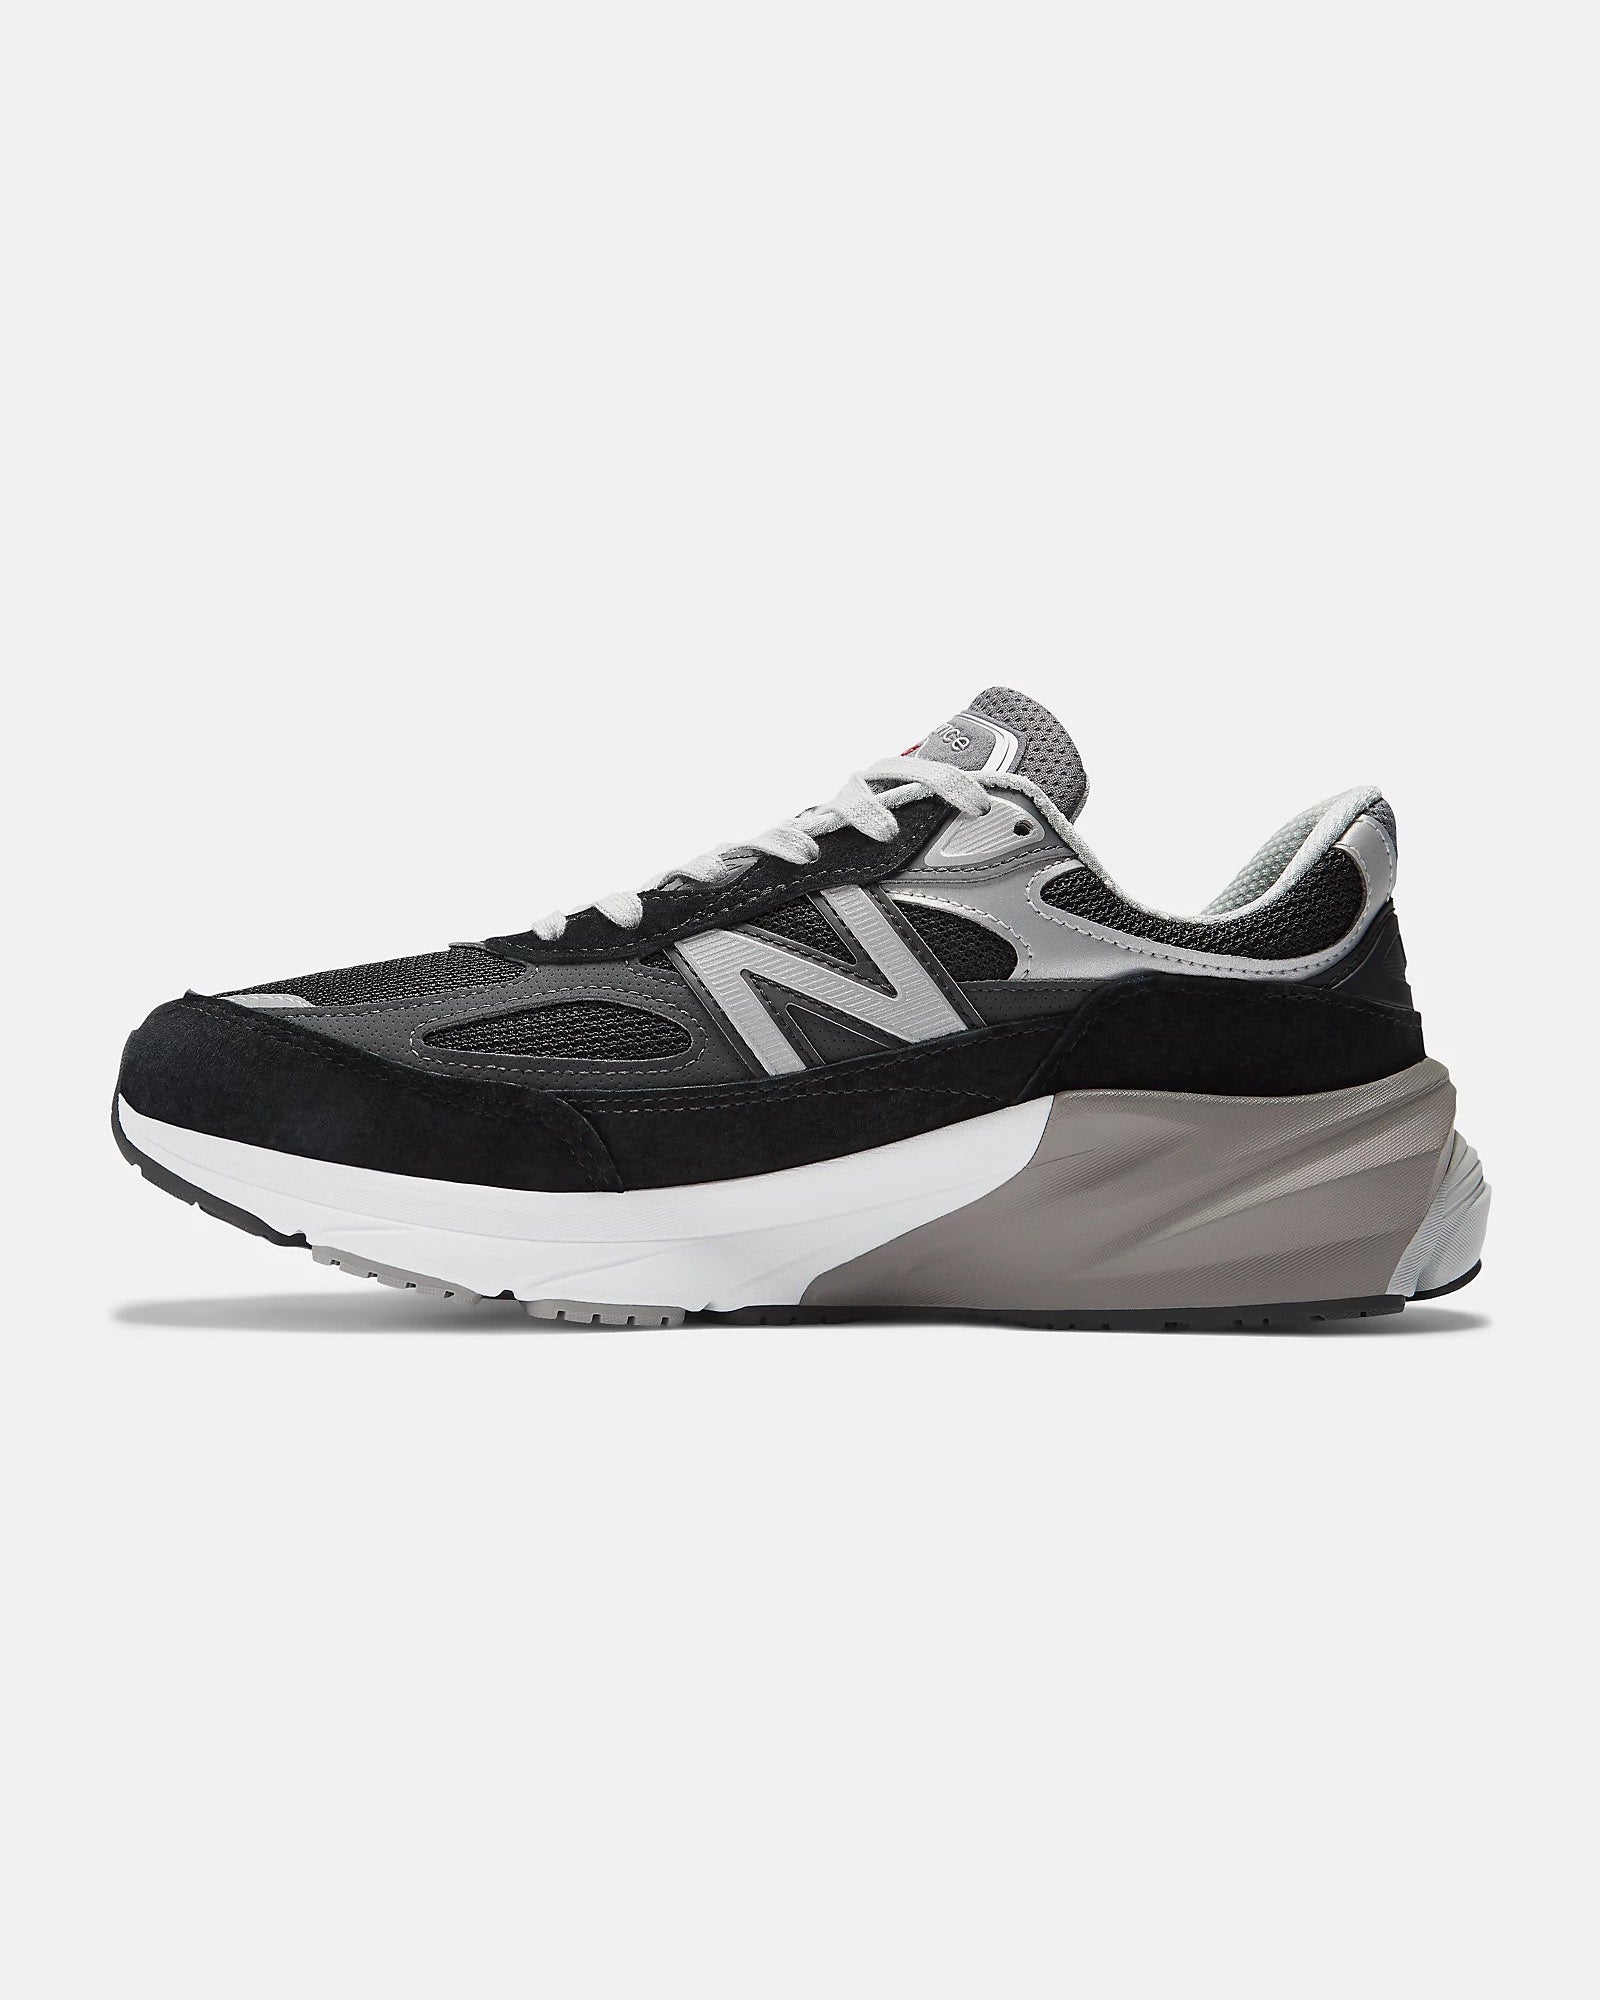 New Balance M's 990v6 Black Shoes Sneakers Men